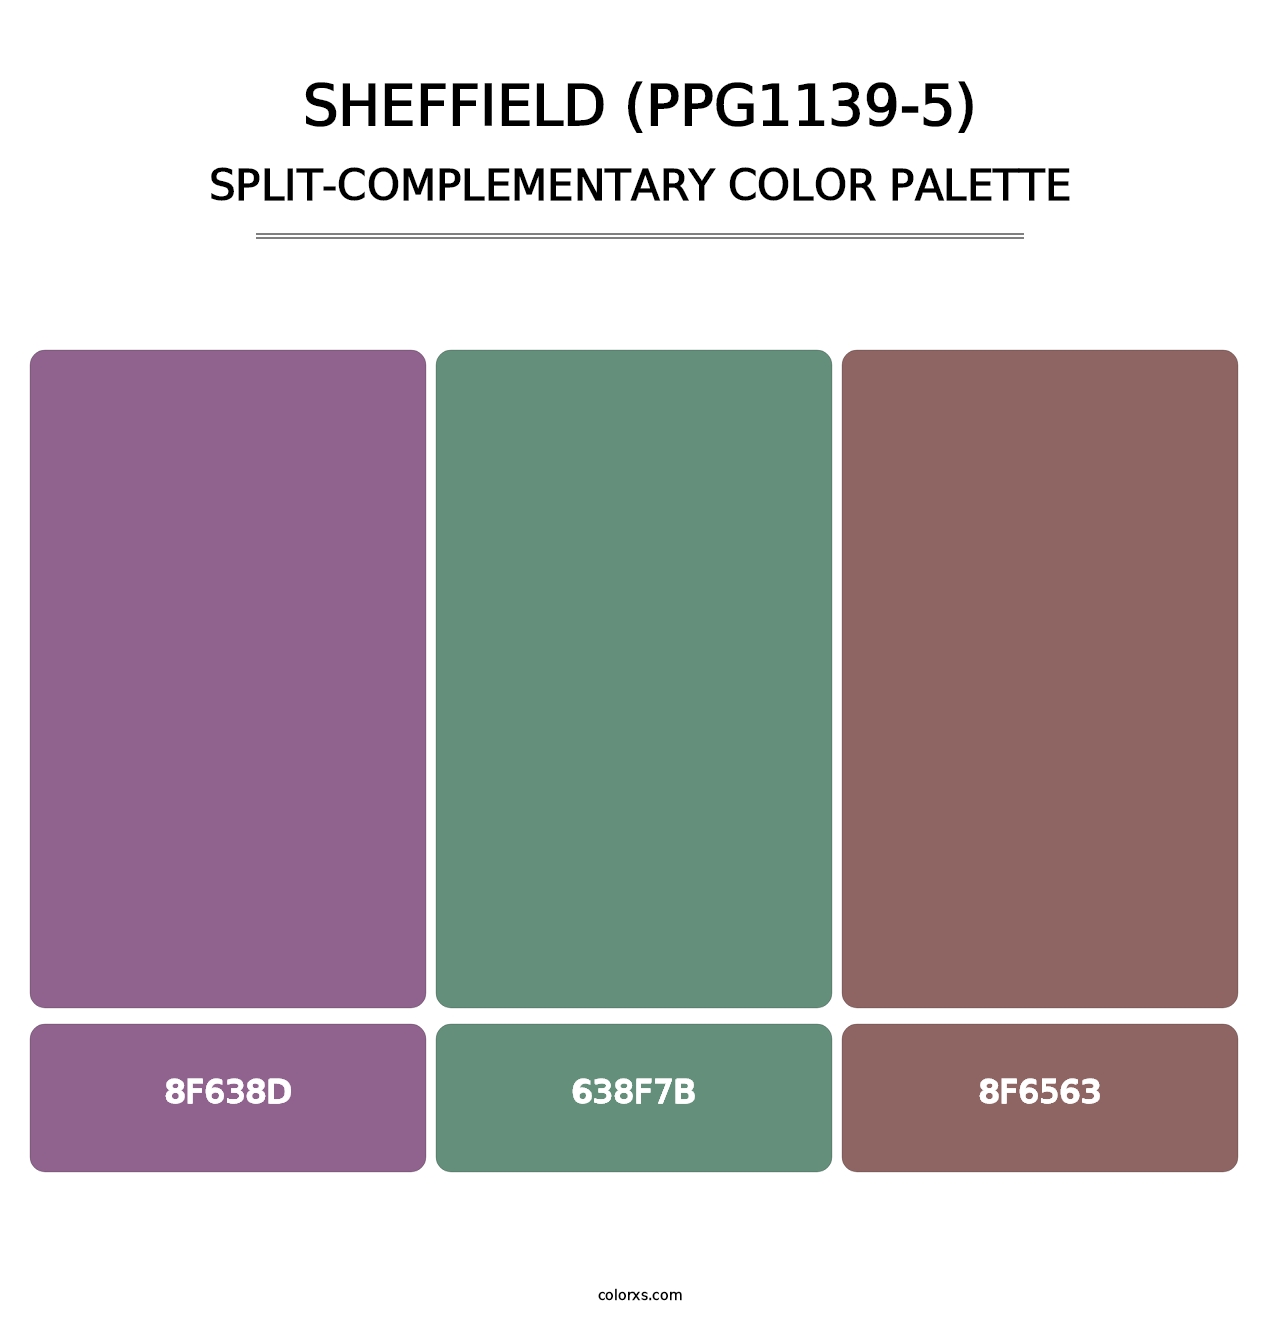 Sheffield (PPG1139-5) - Split-Complementary Color Palette